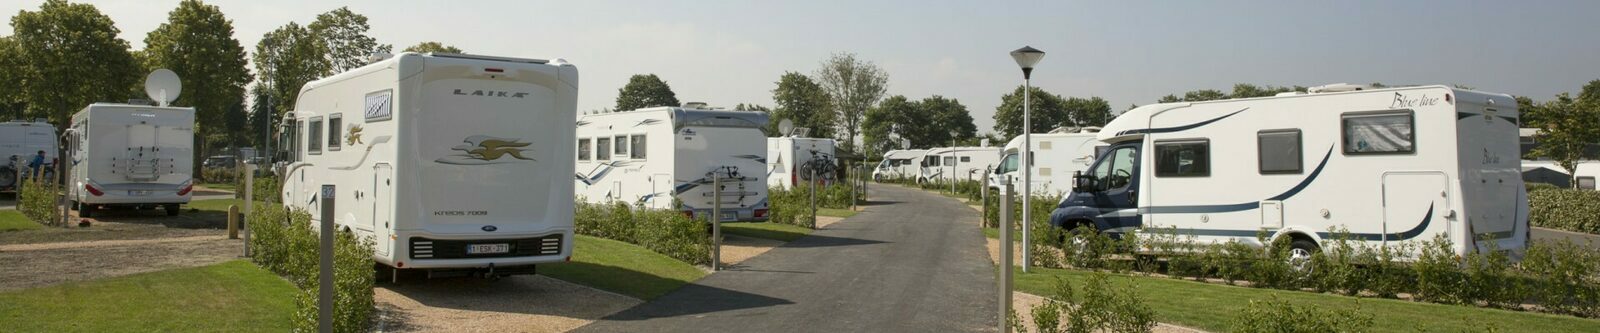 Camperplaats Kompas camping Nieuwpoort